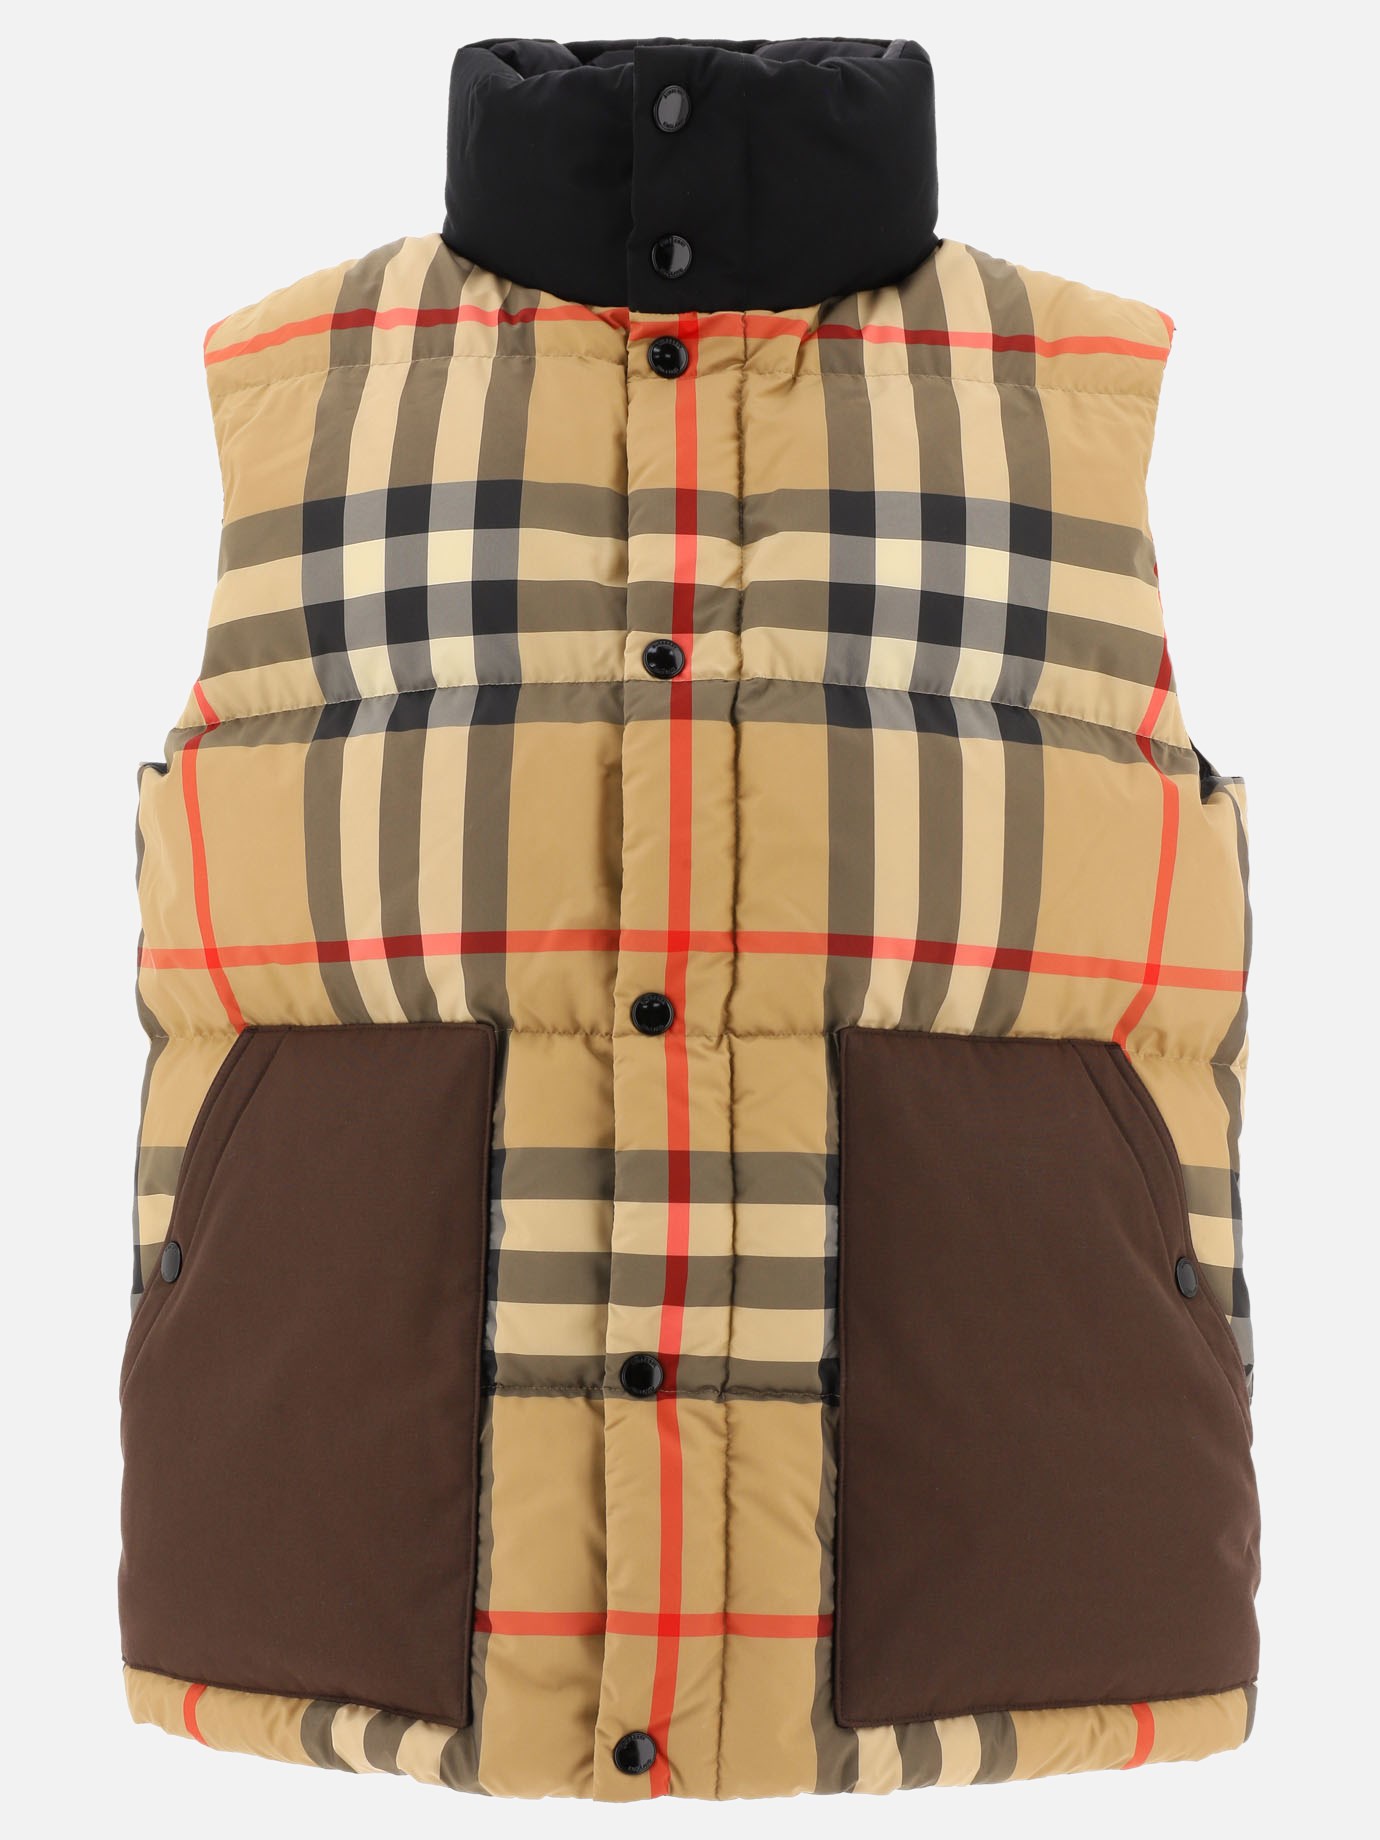  Vintage Check  vest jacket by Burberry